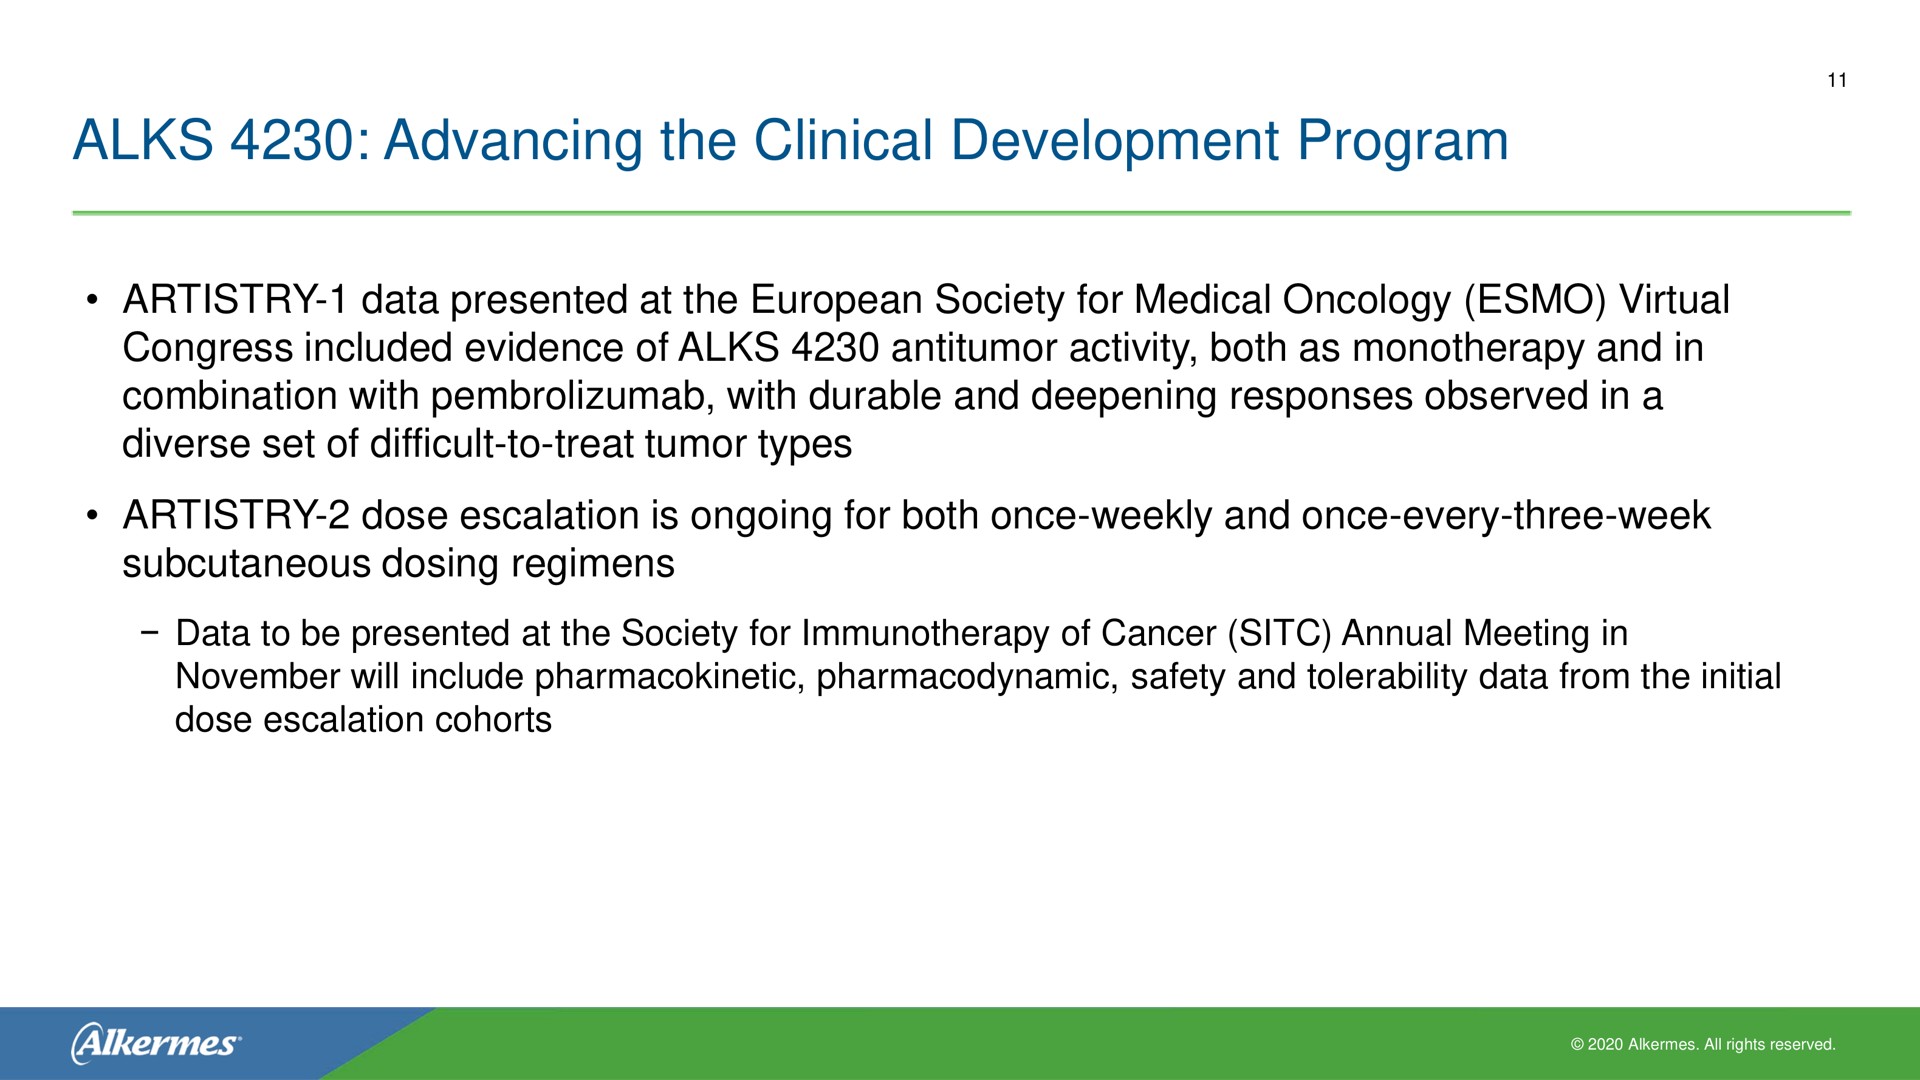 advancing the clinical development program | Alkermes